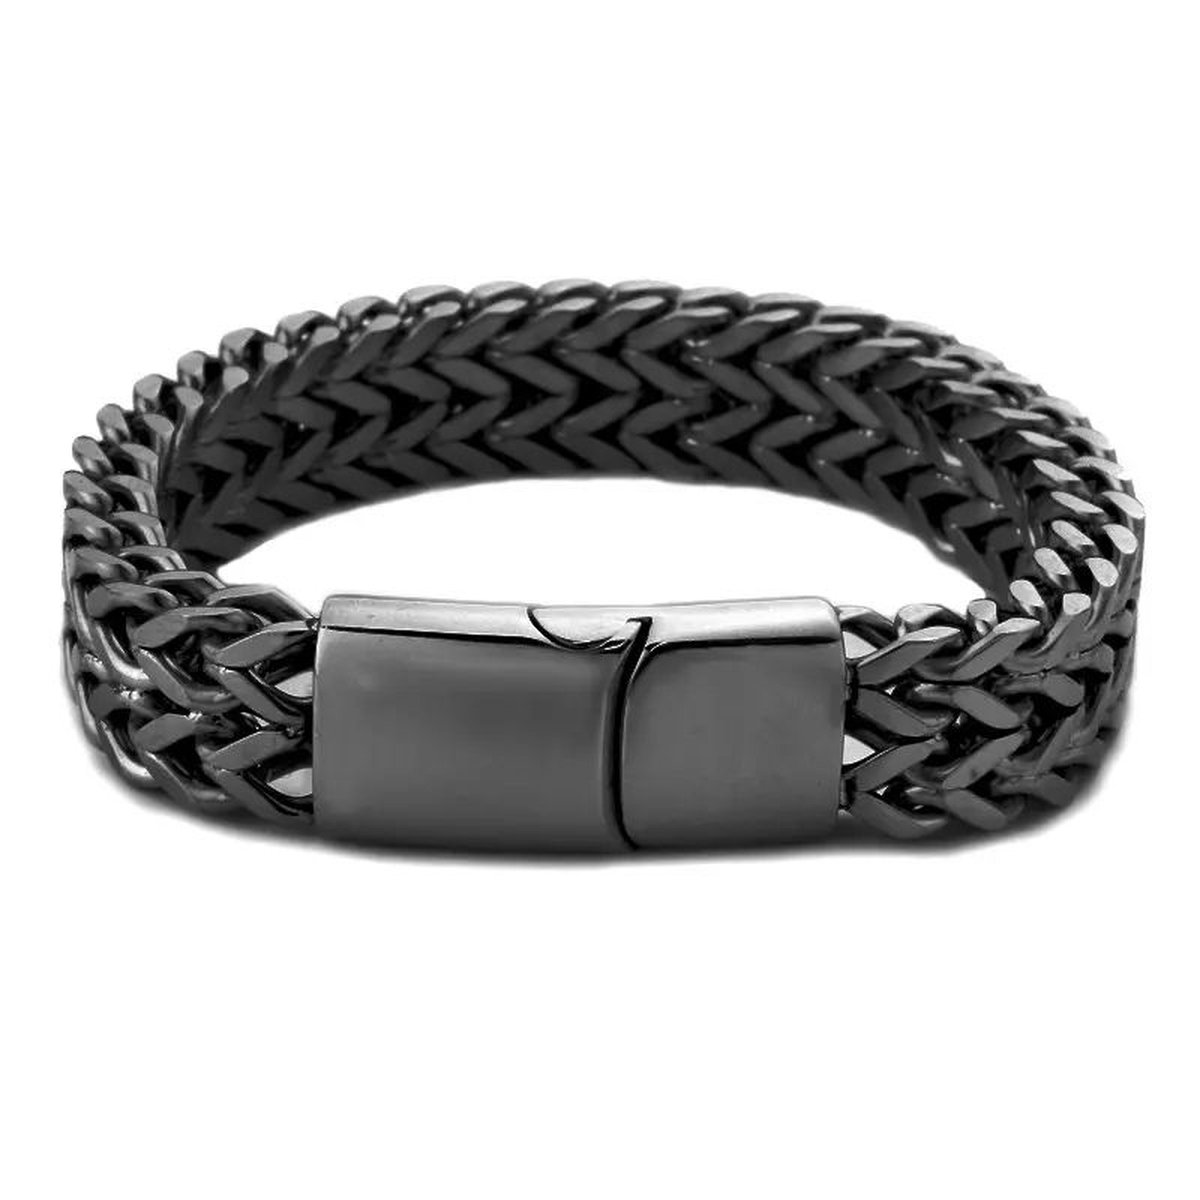 Donley - Armband voor mannen - Woven bracelet - Braided bracelet - cubaanse armband - heren sierraad - schakelarmband - schakelarmband heren - 21 cm - zilveren armband - ketting armband - chain - zwarte armband - armband zwart - black wristband